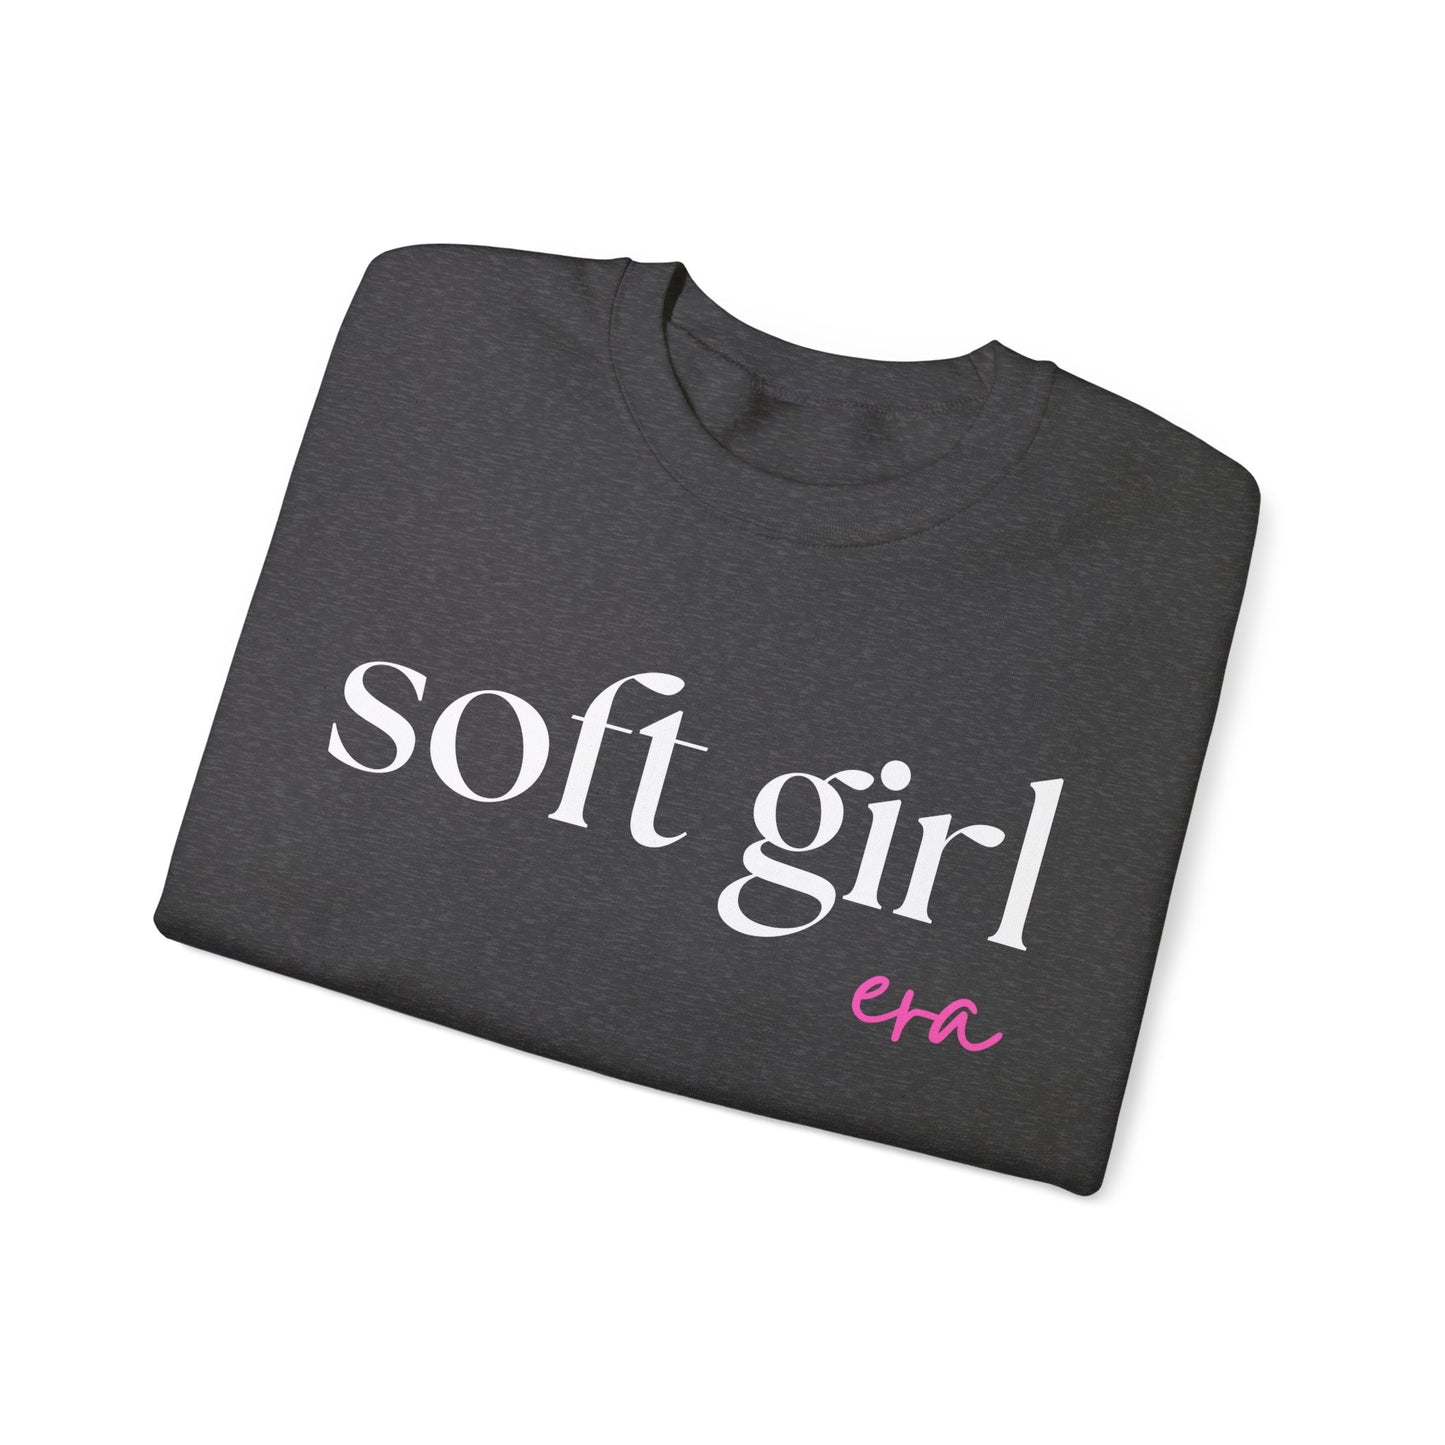 "It Girl Collection" Soft Girl Era - Black